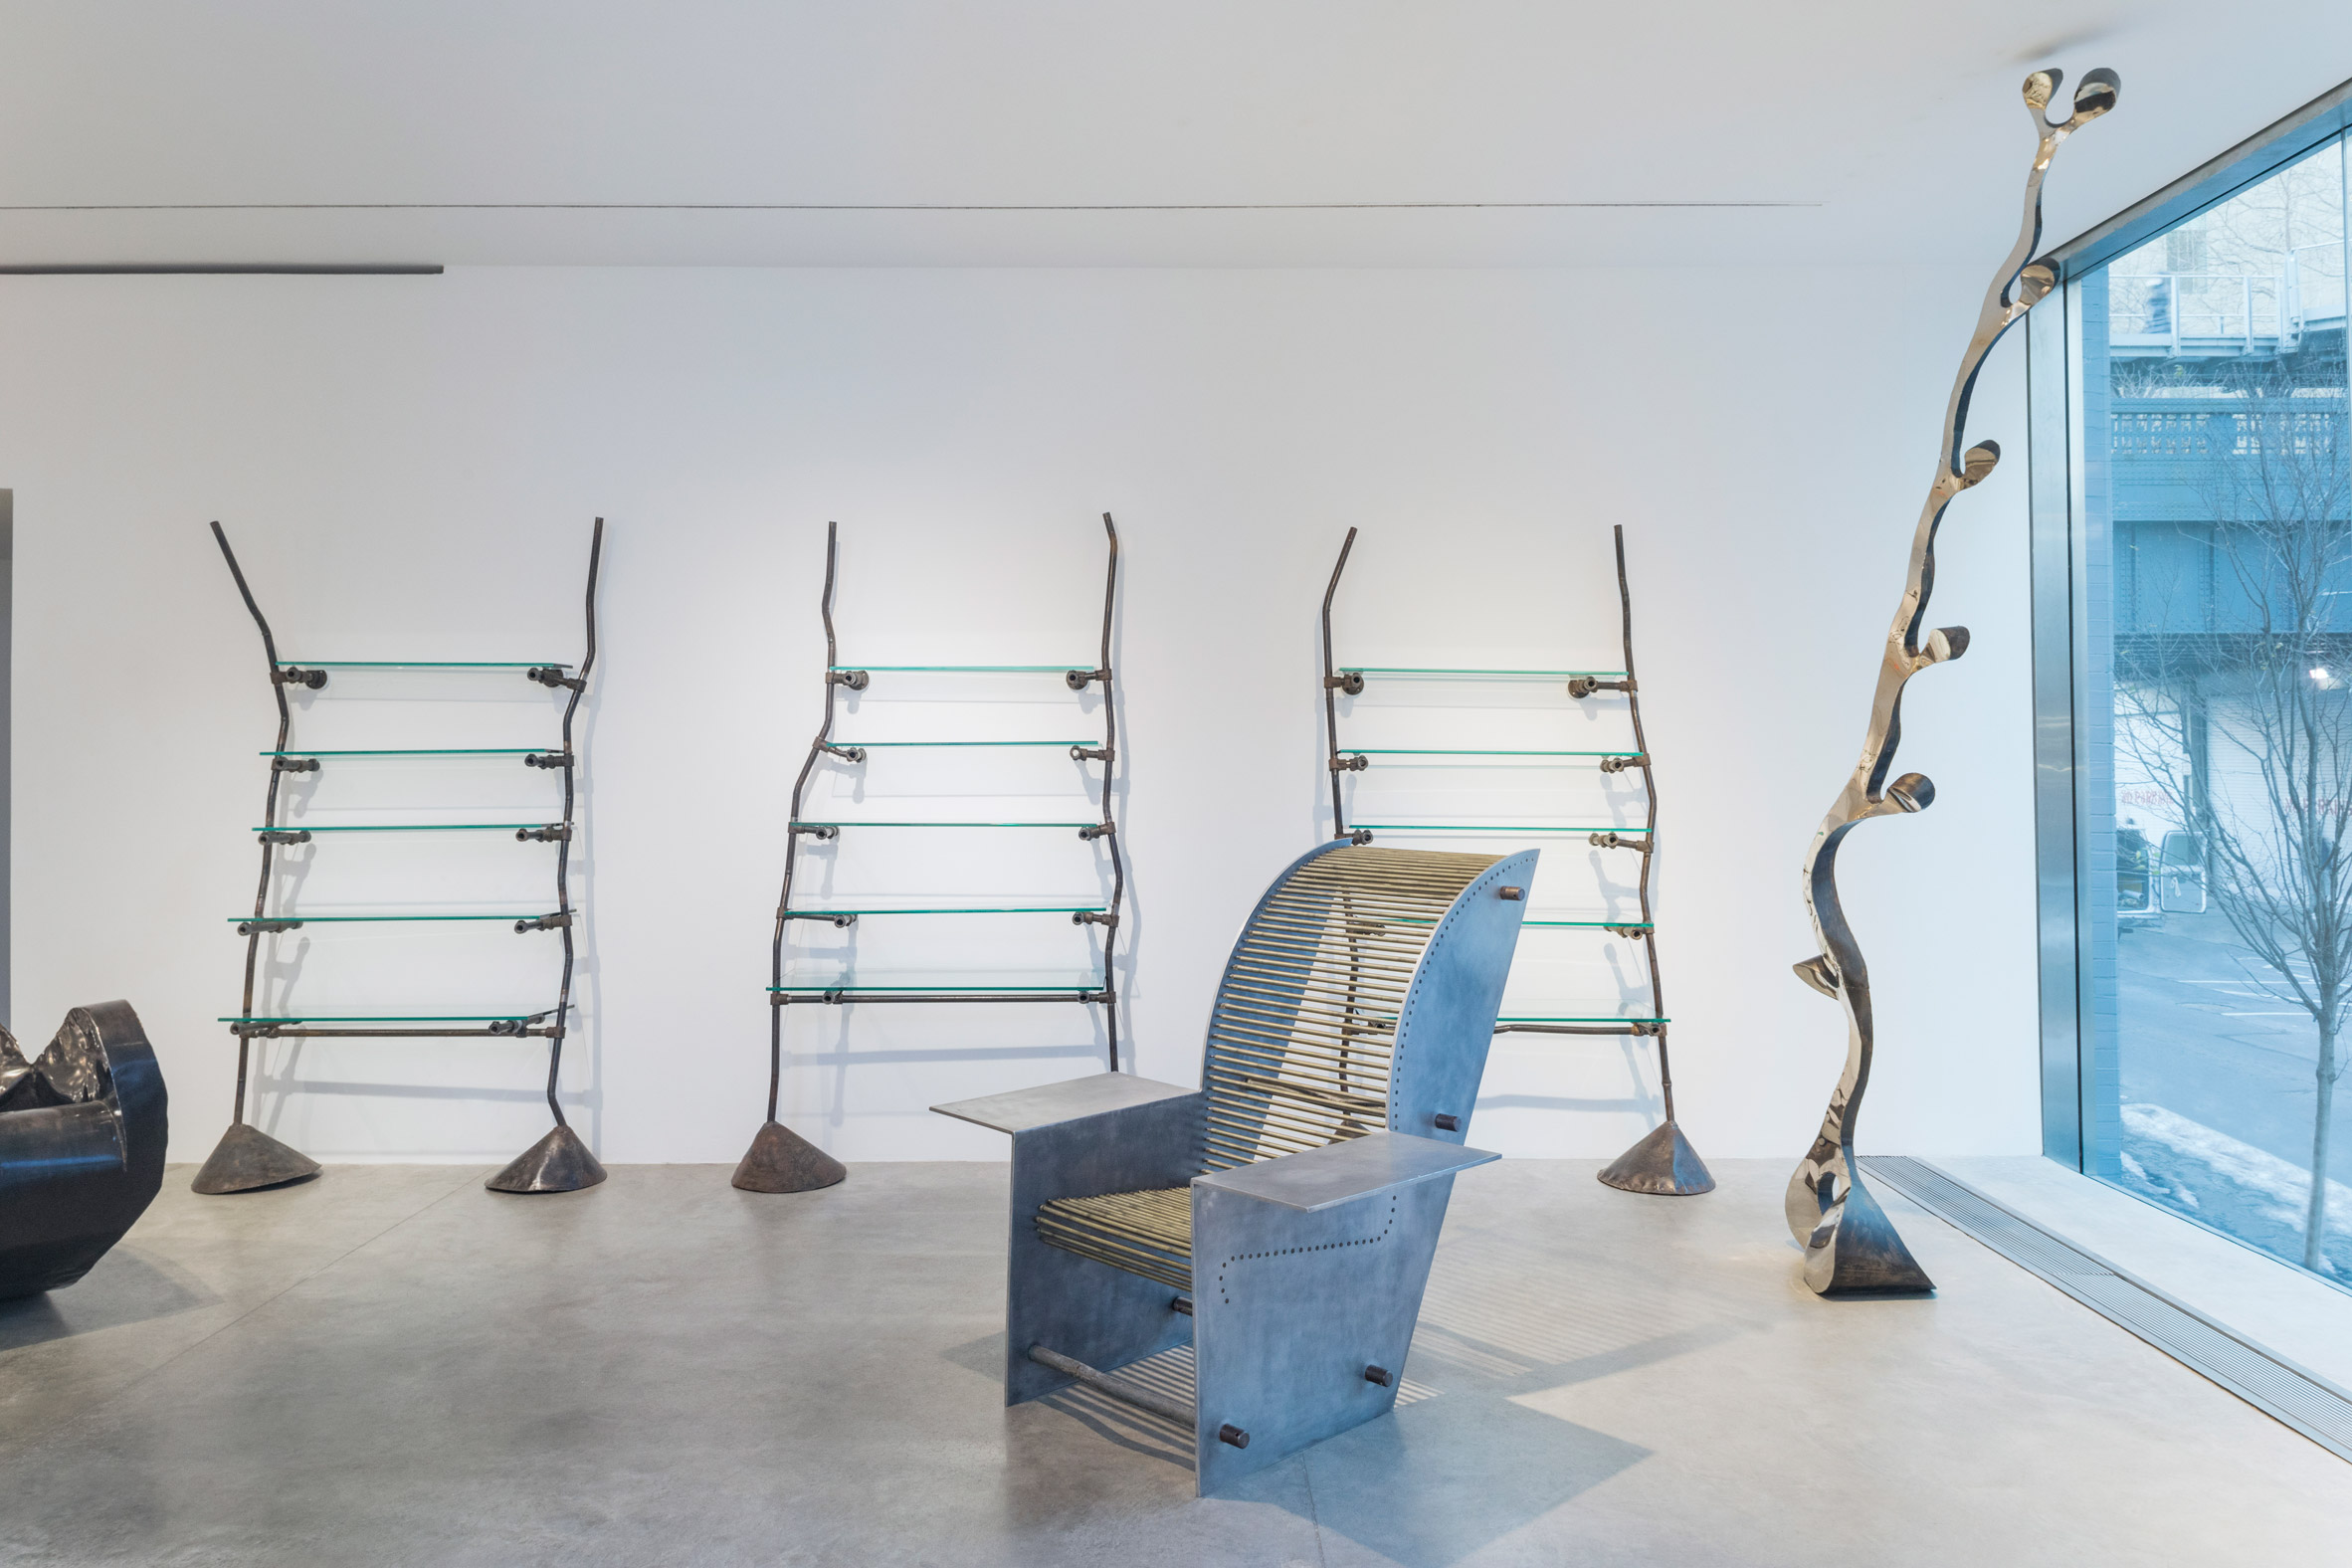 An armchair and ladders inside an exhibition at Friedman Benda